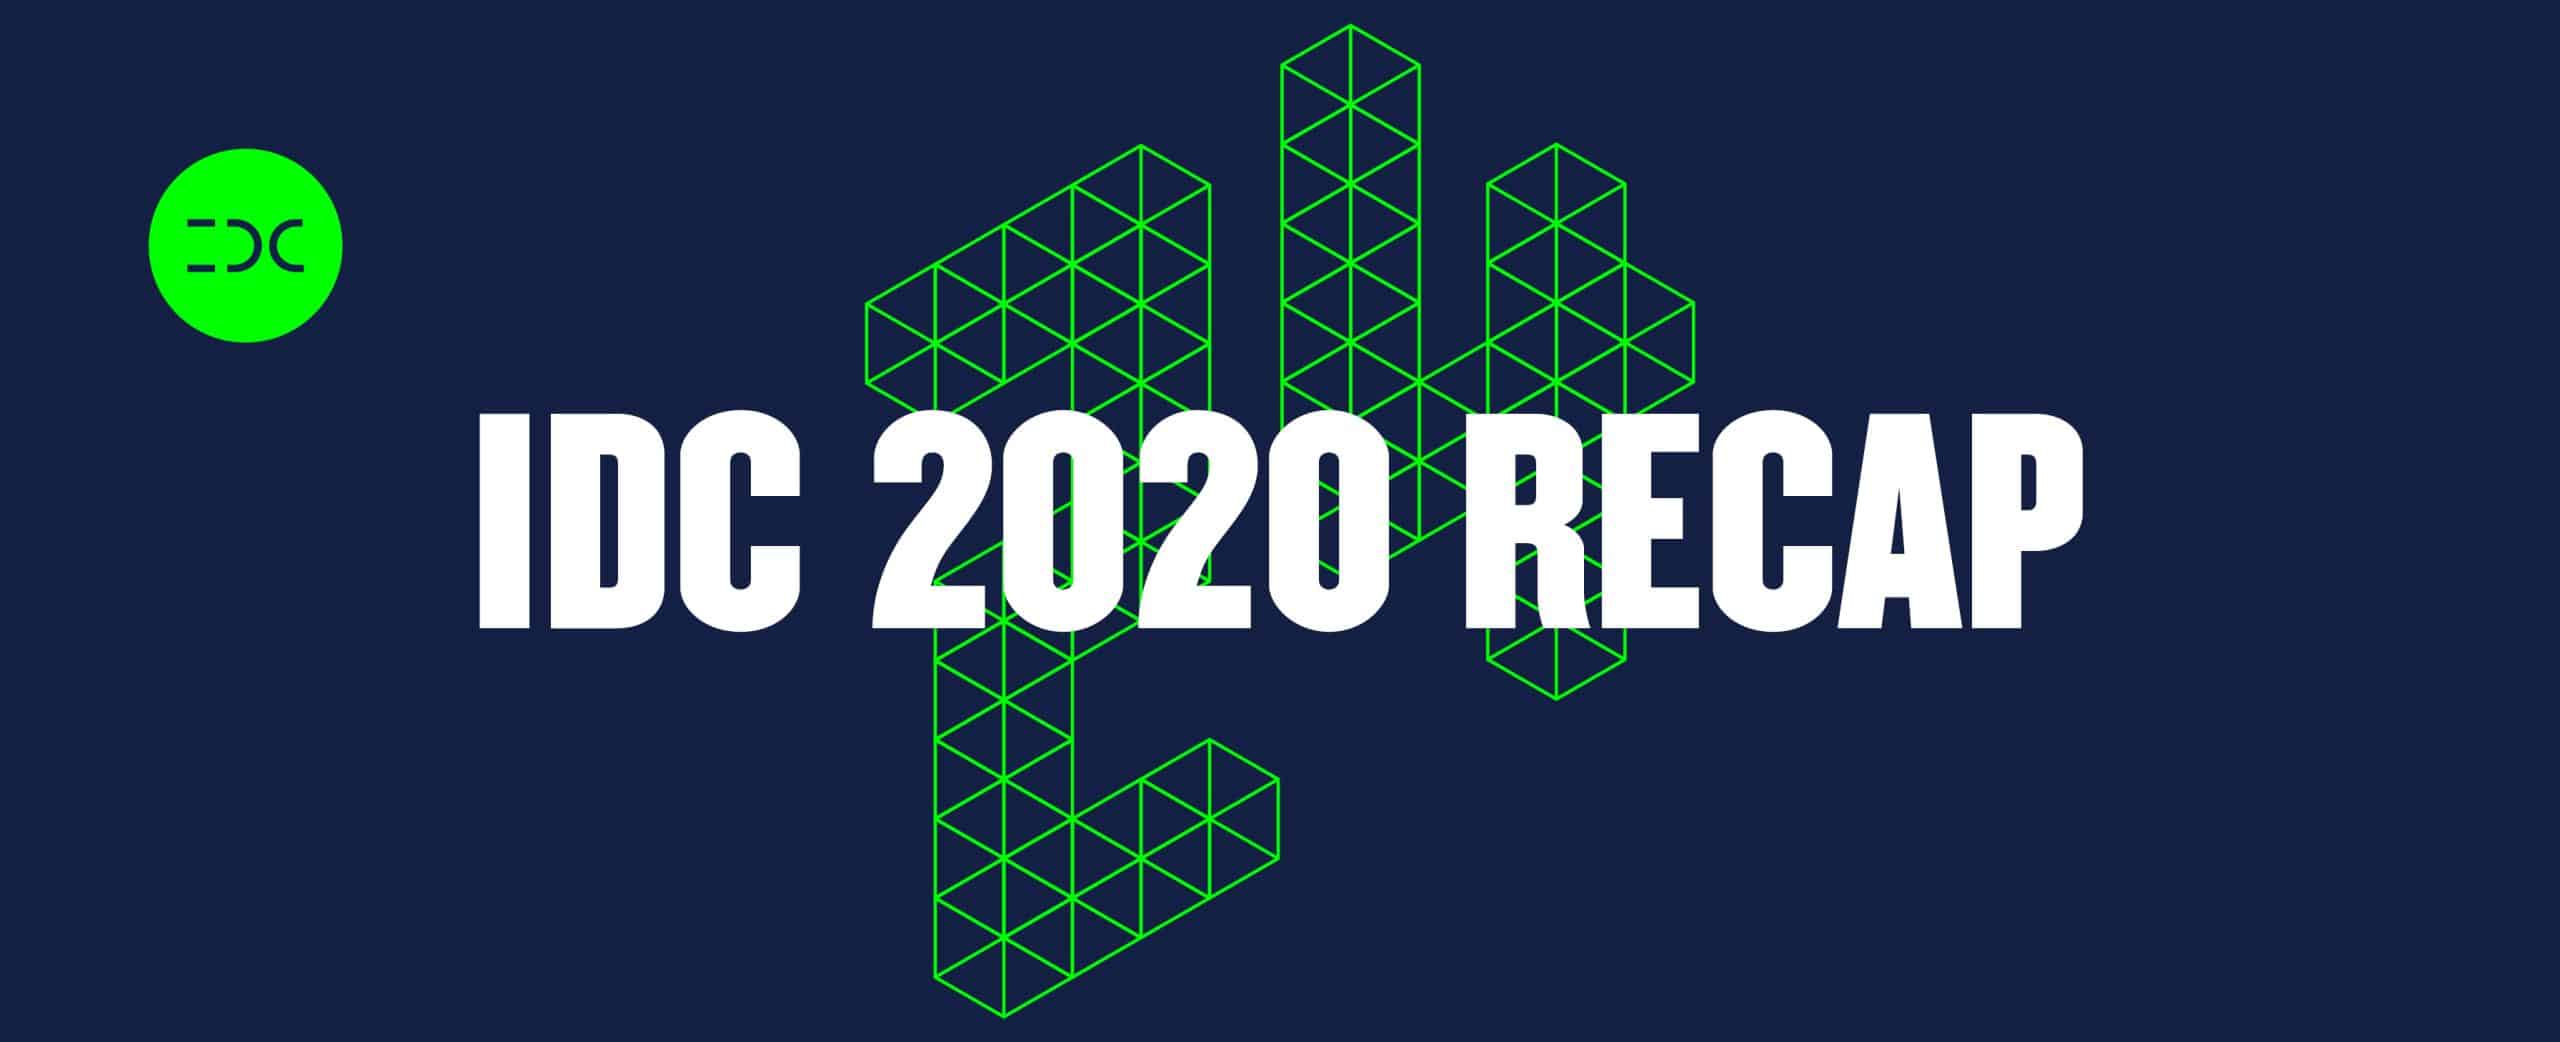 2020IDC_RECAP_banner.jpg